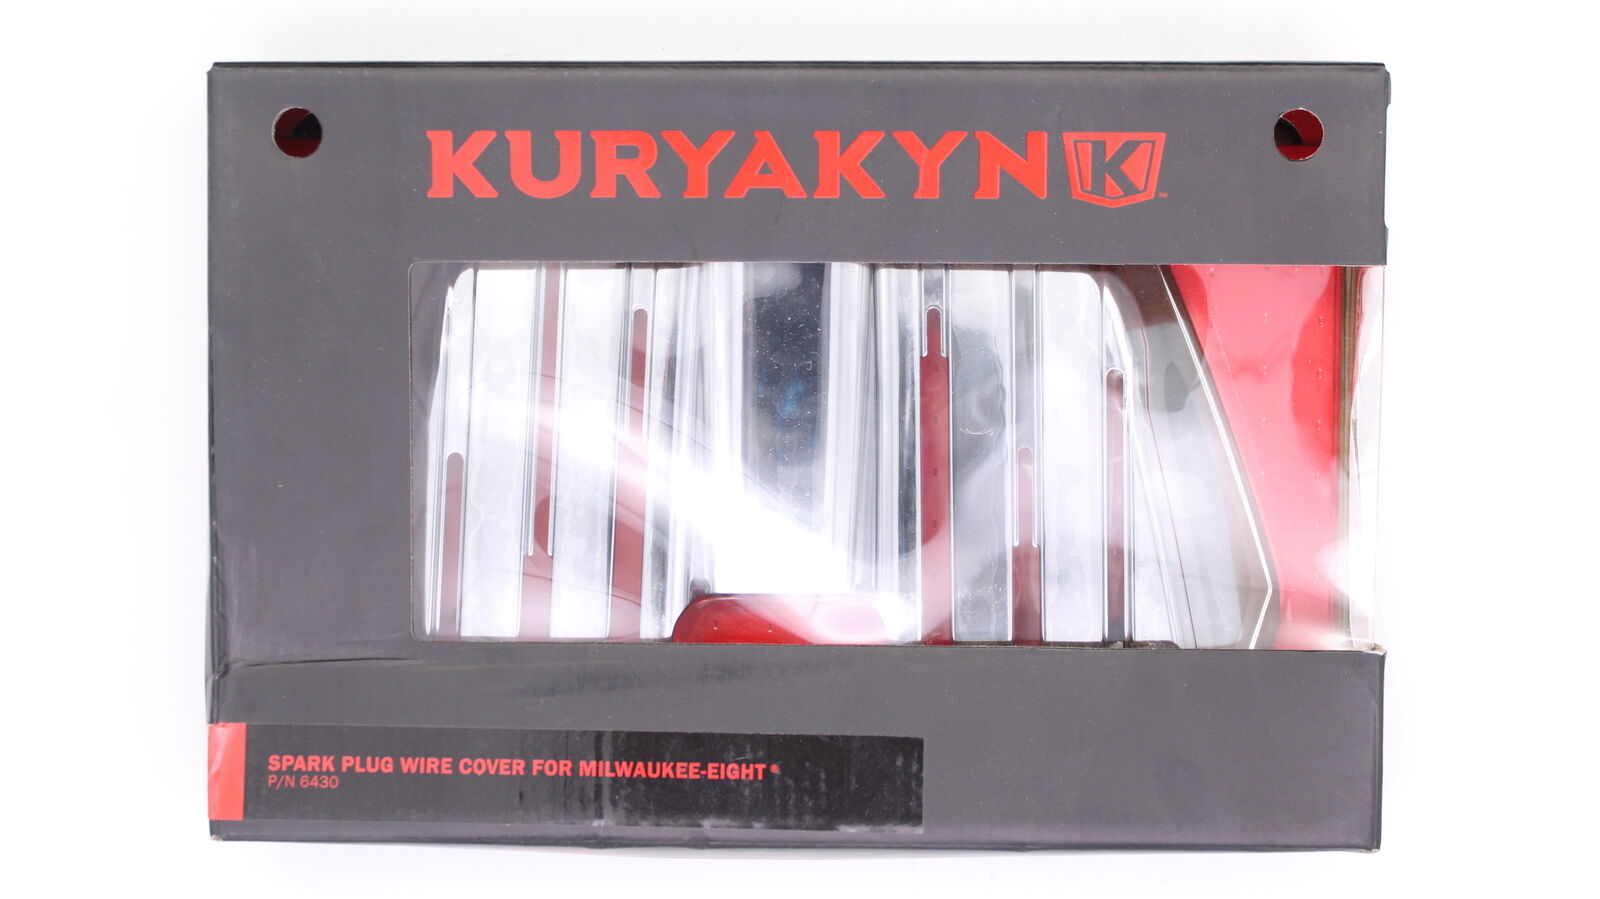 Kuryakyn Spark Plug Wire Cover Part Number - 6430